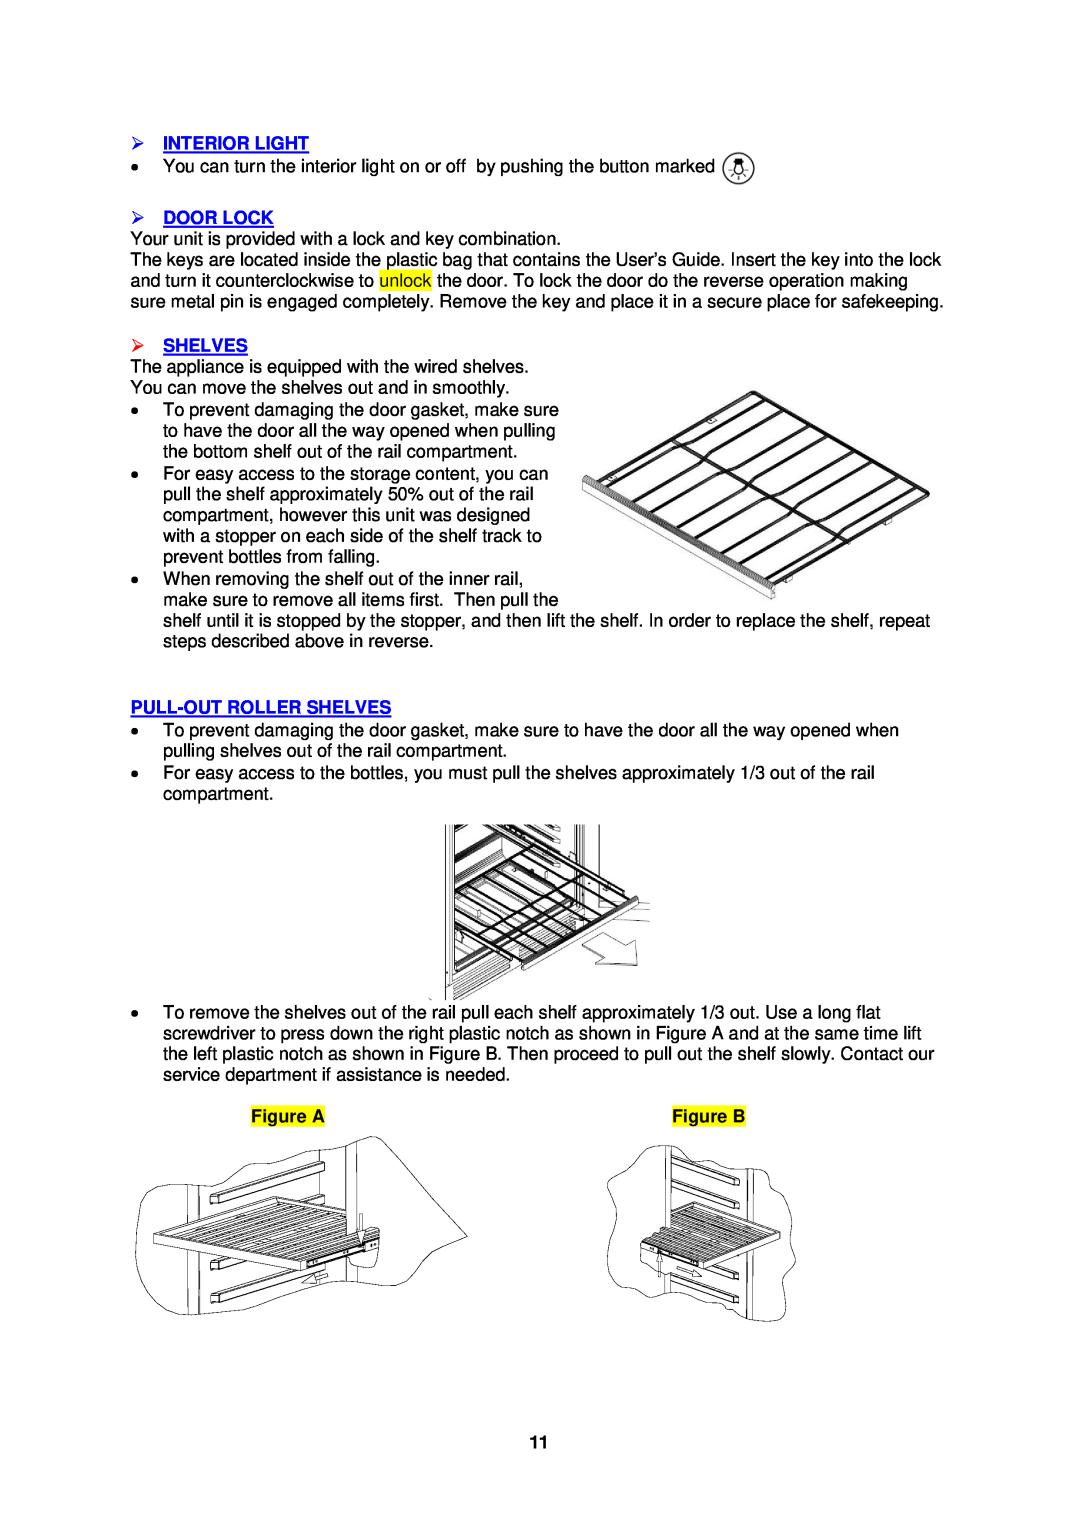 Avanti WCR506SS instruction manual  Interior Light,  Door Lock,  Shelves, Pull-Out Roller Shelves, Figure B 